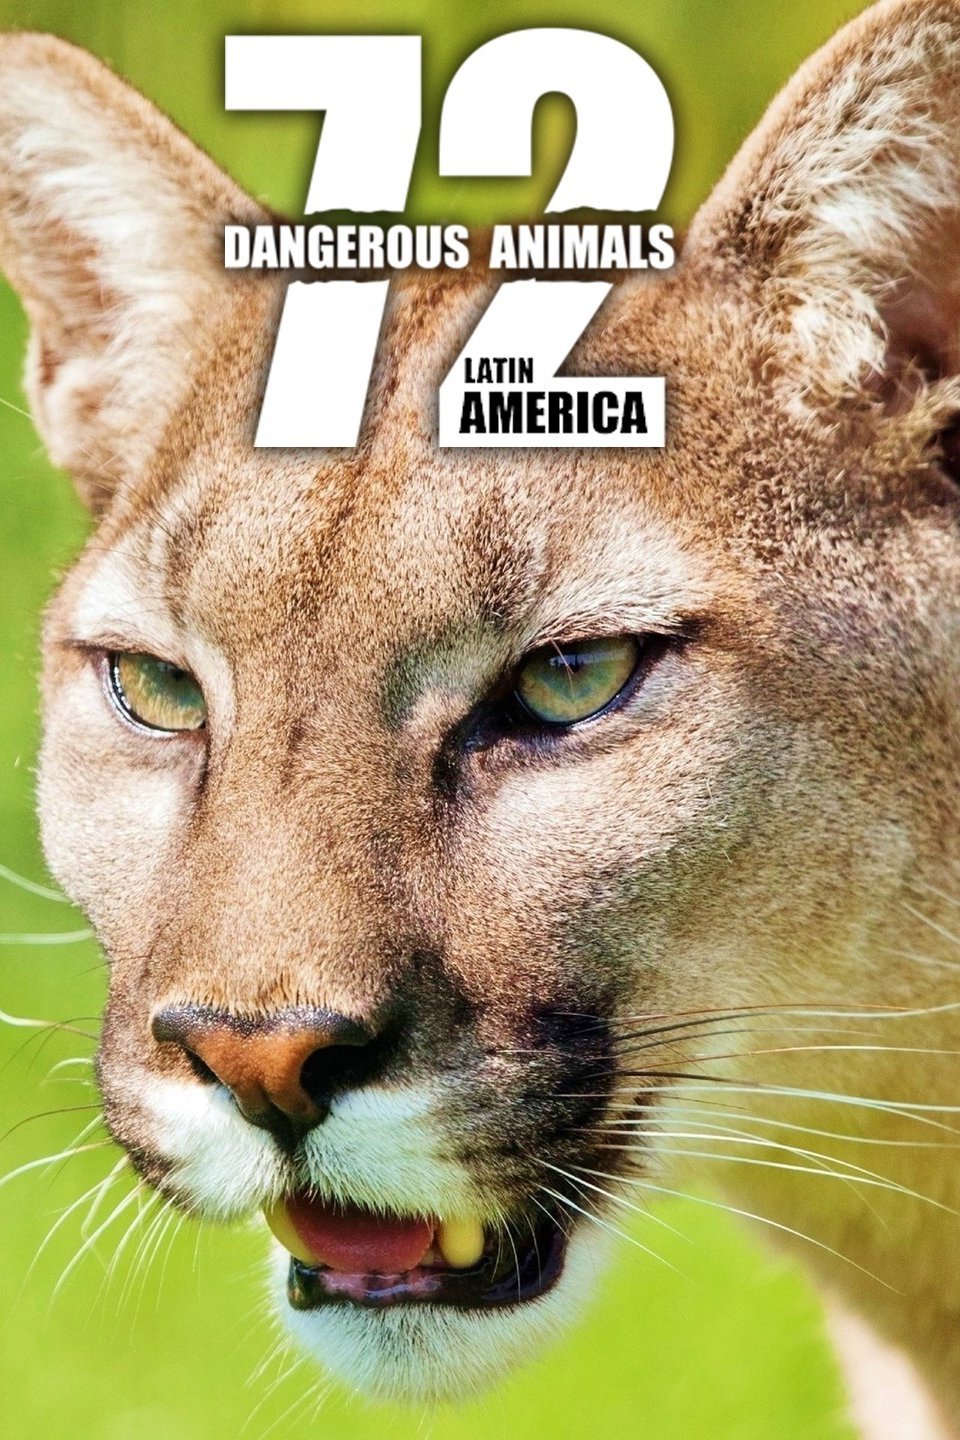 72 Dangerous Animals (2017) สัตว์อันตราย ลาตินอเมริกา